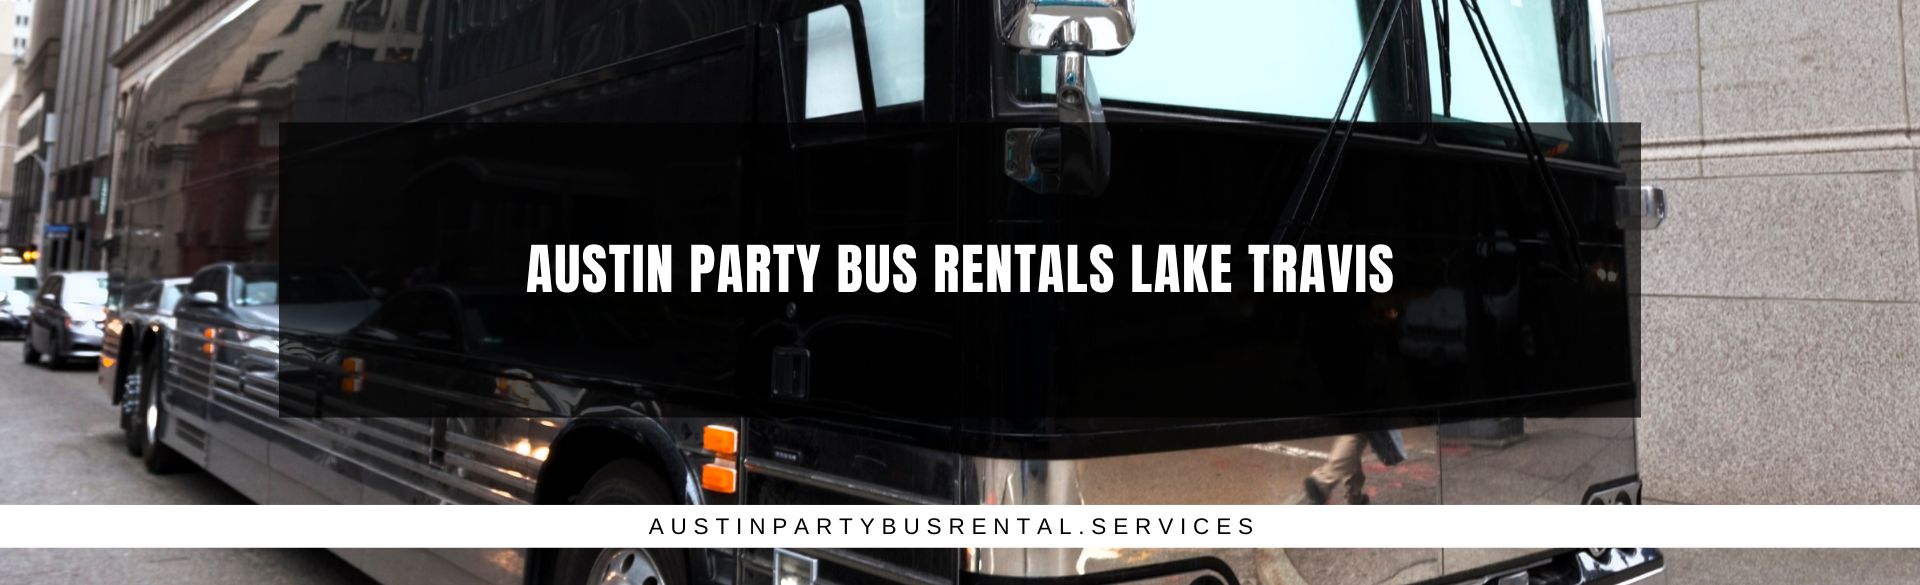 Austin Party Bus Rentals Lake Travis